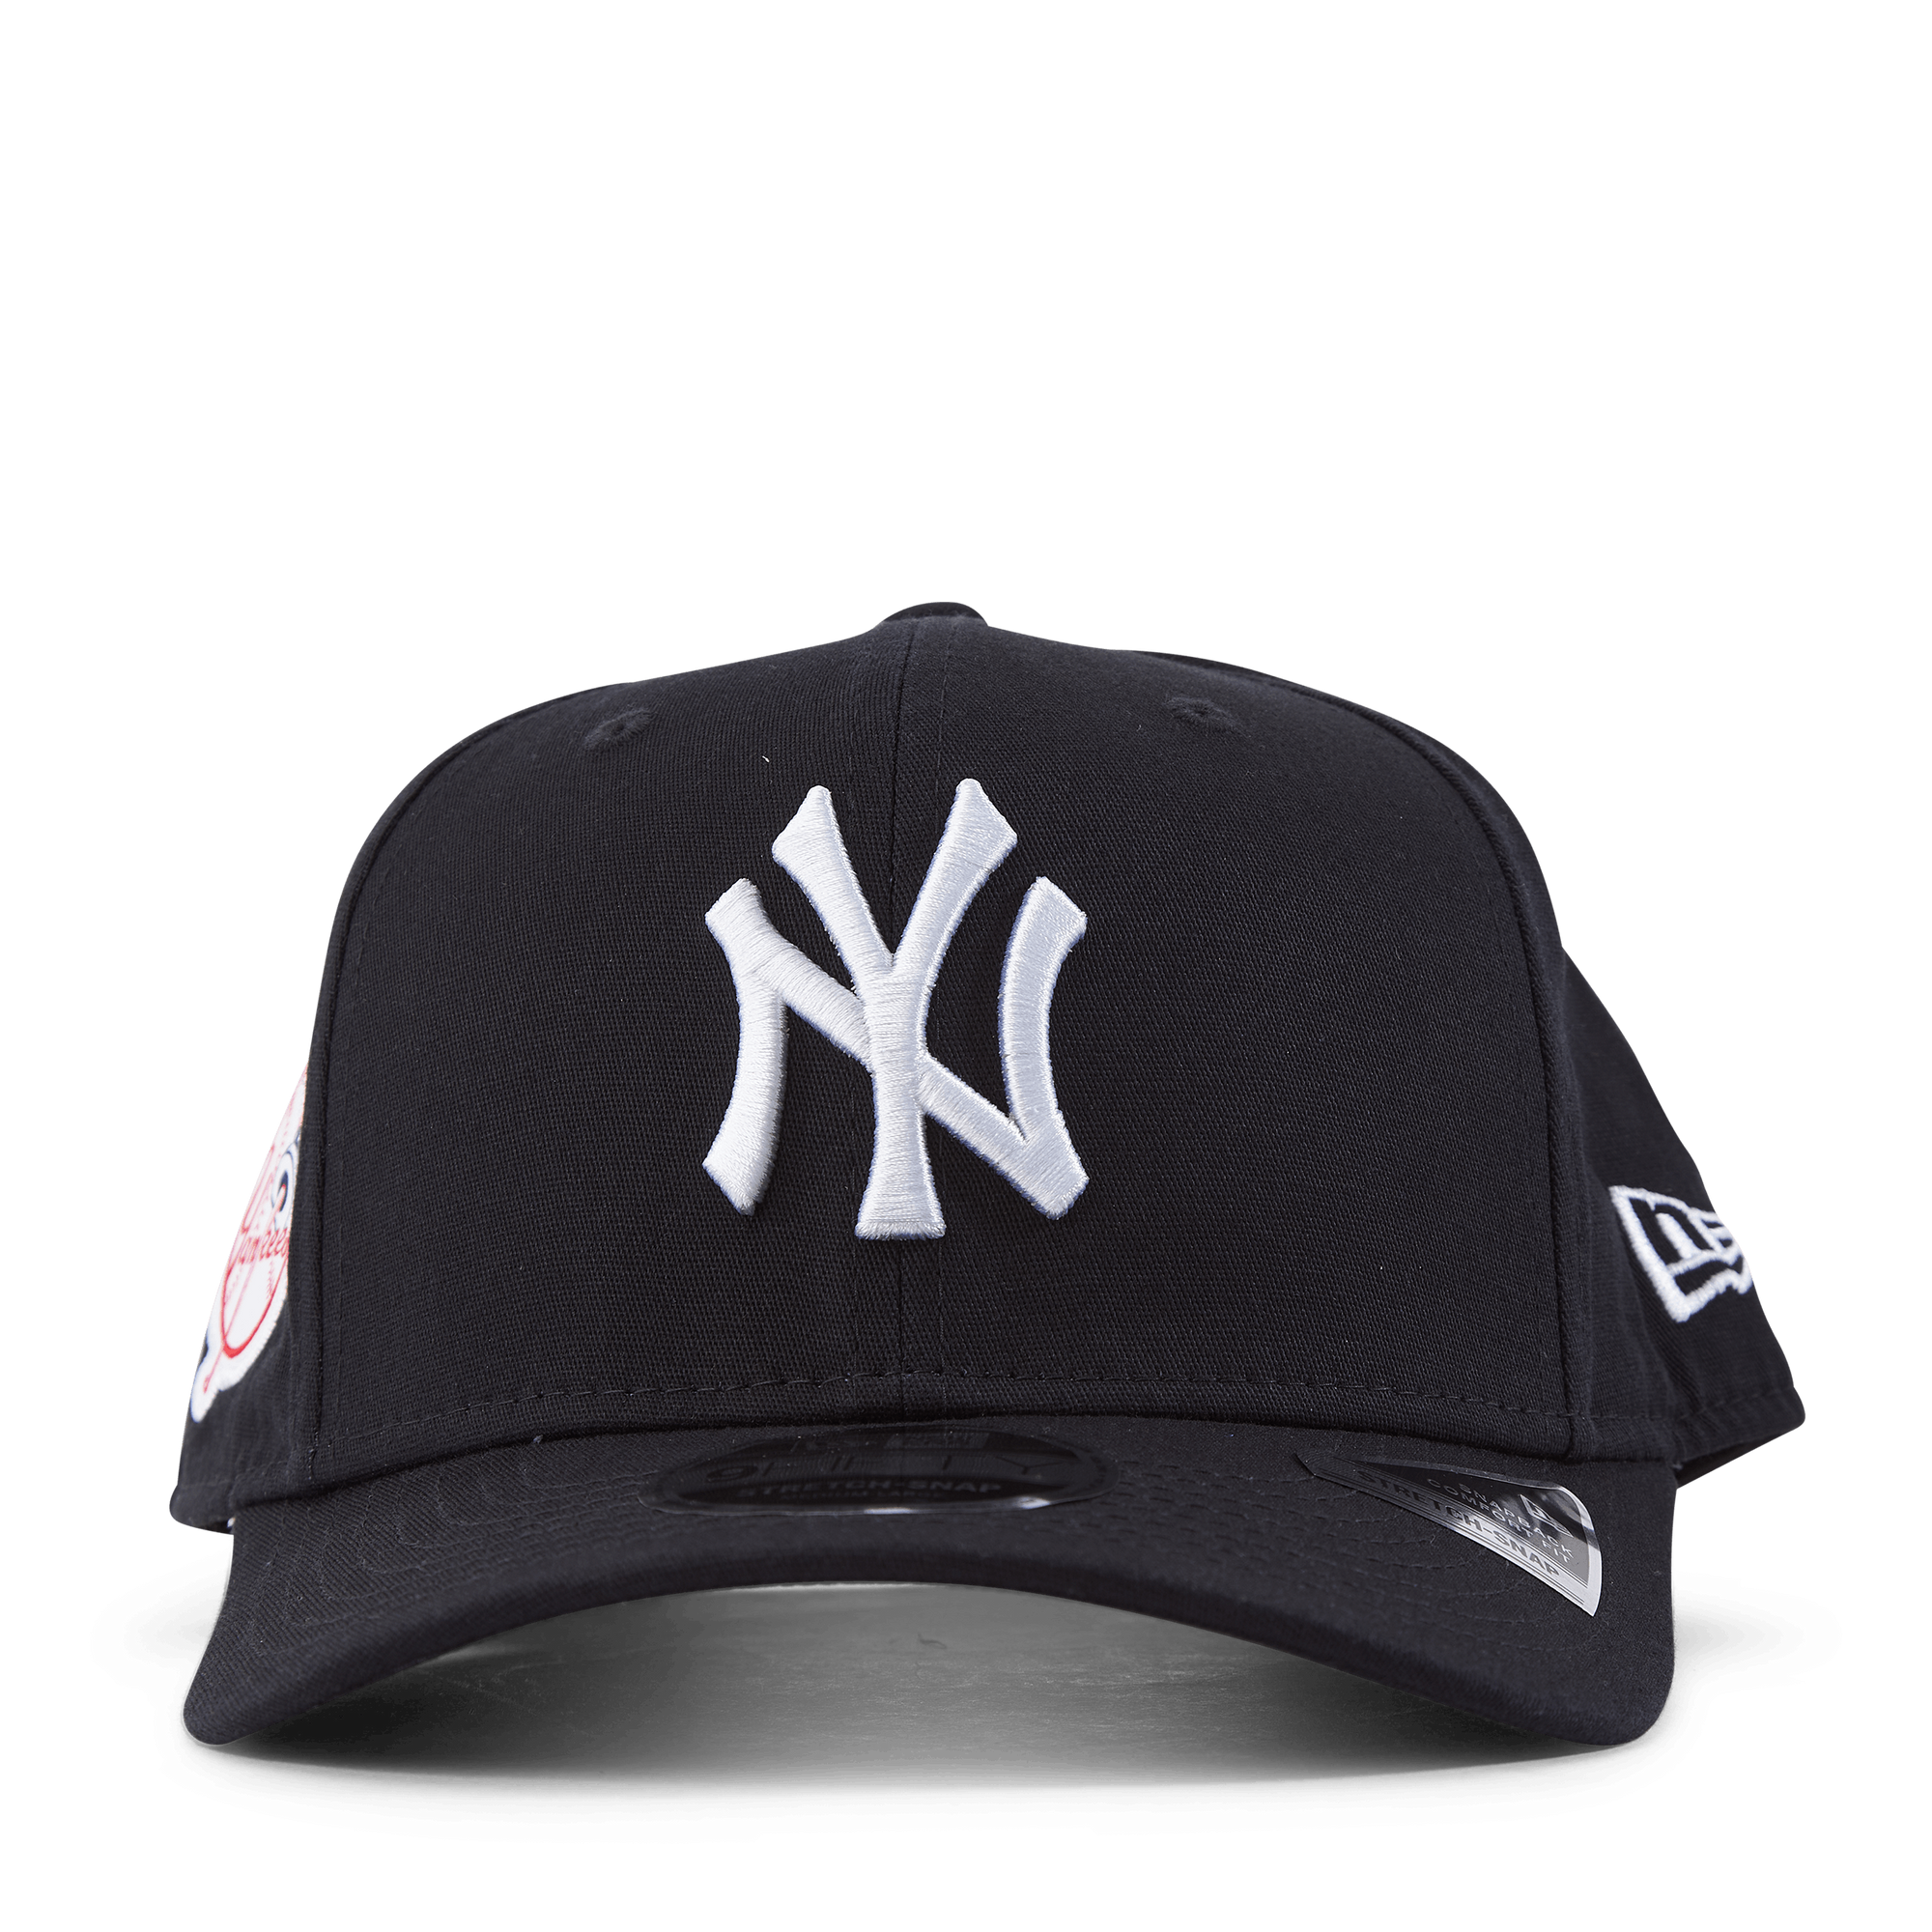 MLB LOGO 950 STSP NEW YORK YANKEES